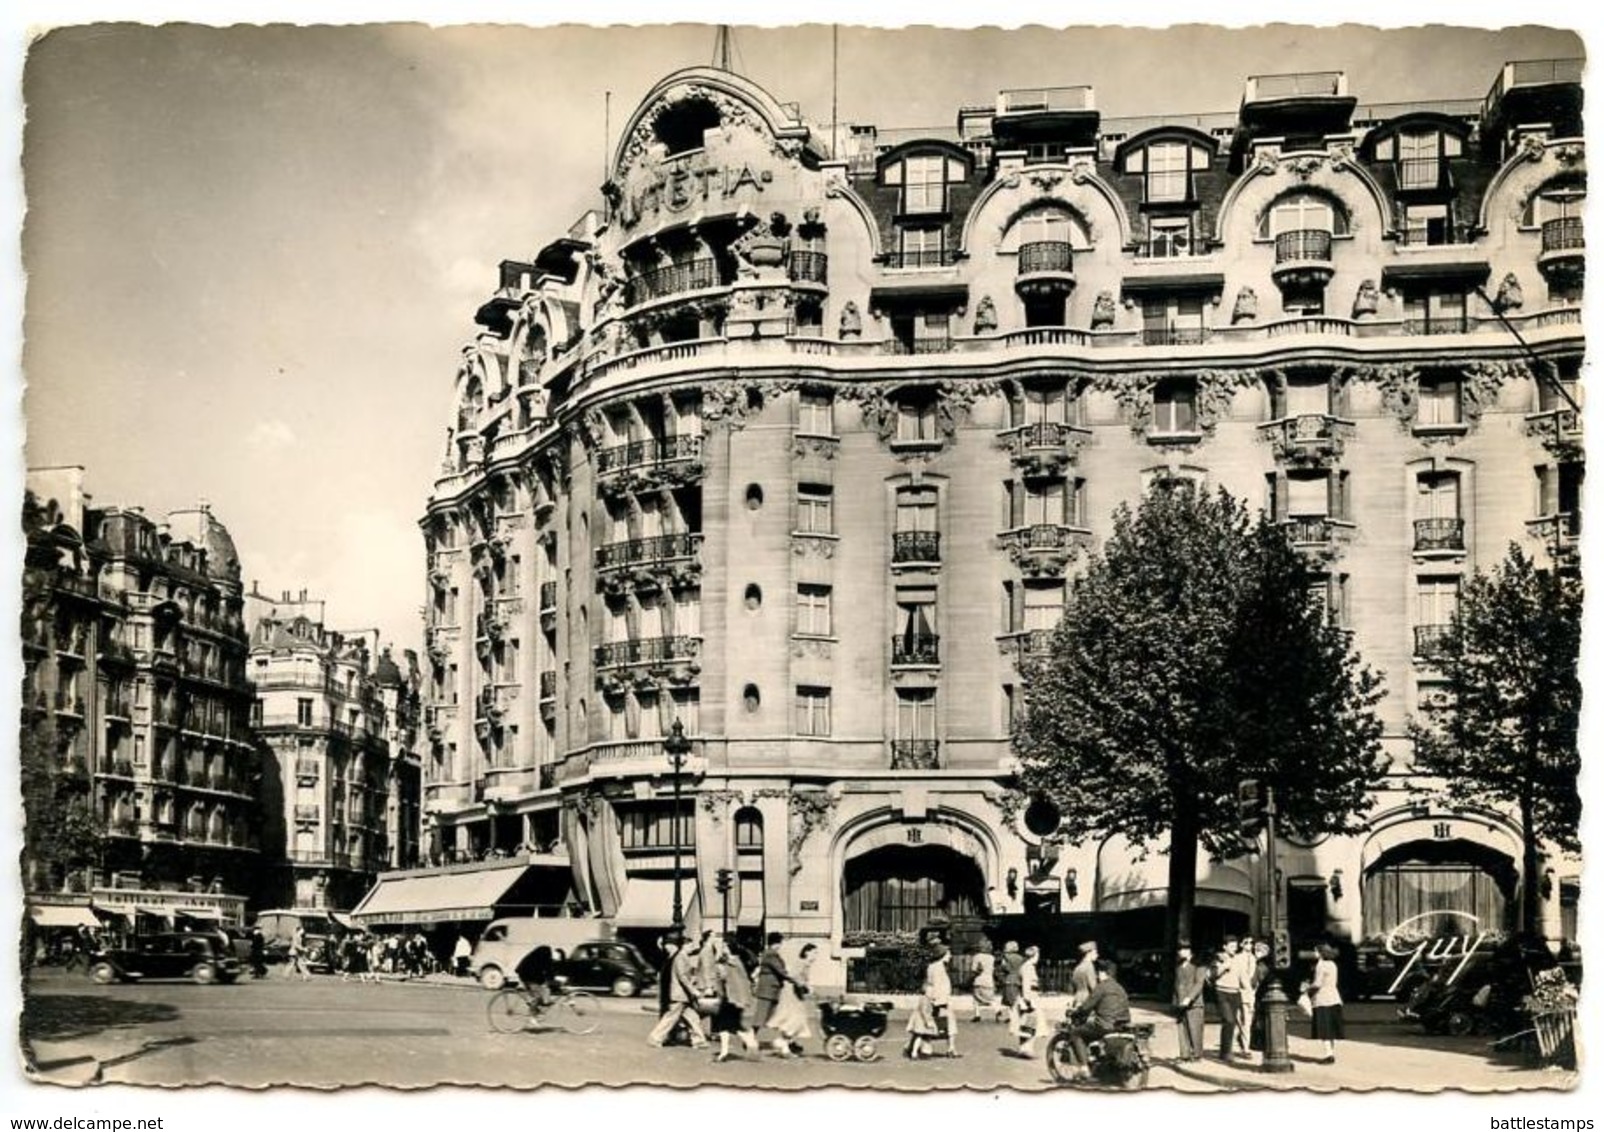 France Vintage RPPC Postcard Paris - Hotel Lutétia, Raspail Boulevard - Bar, Alberghi, Ristoranti